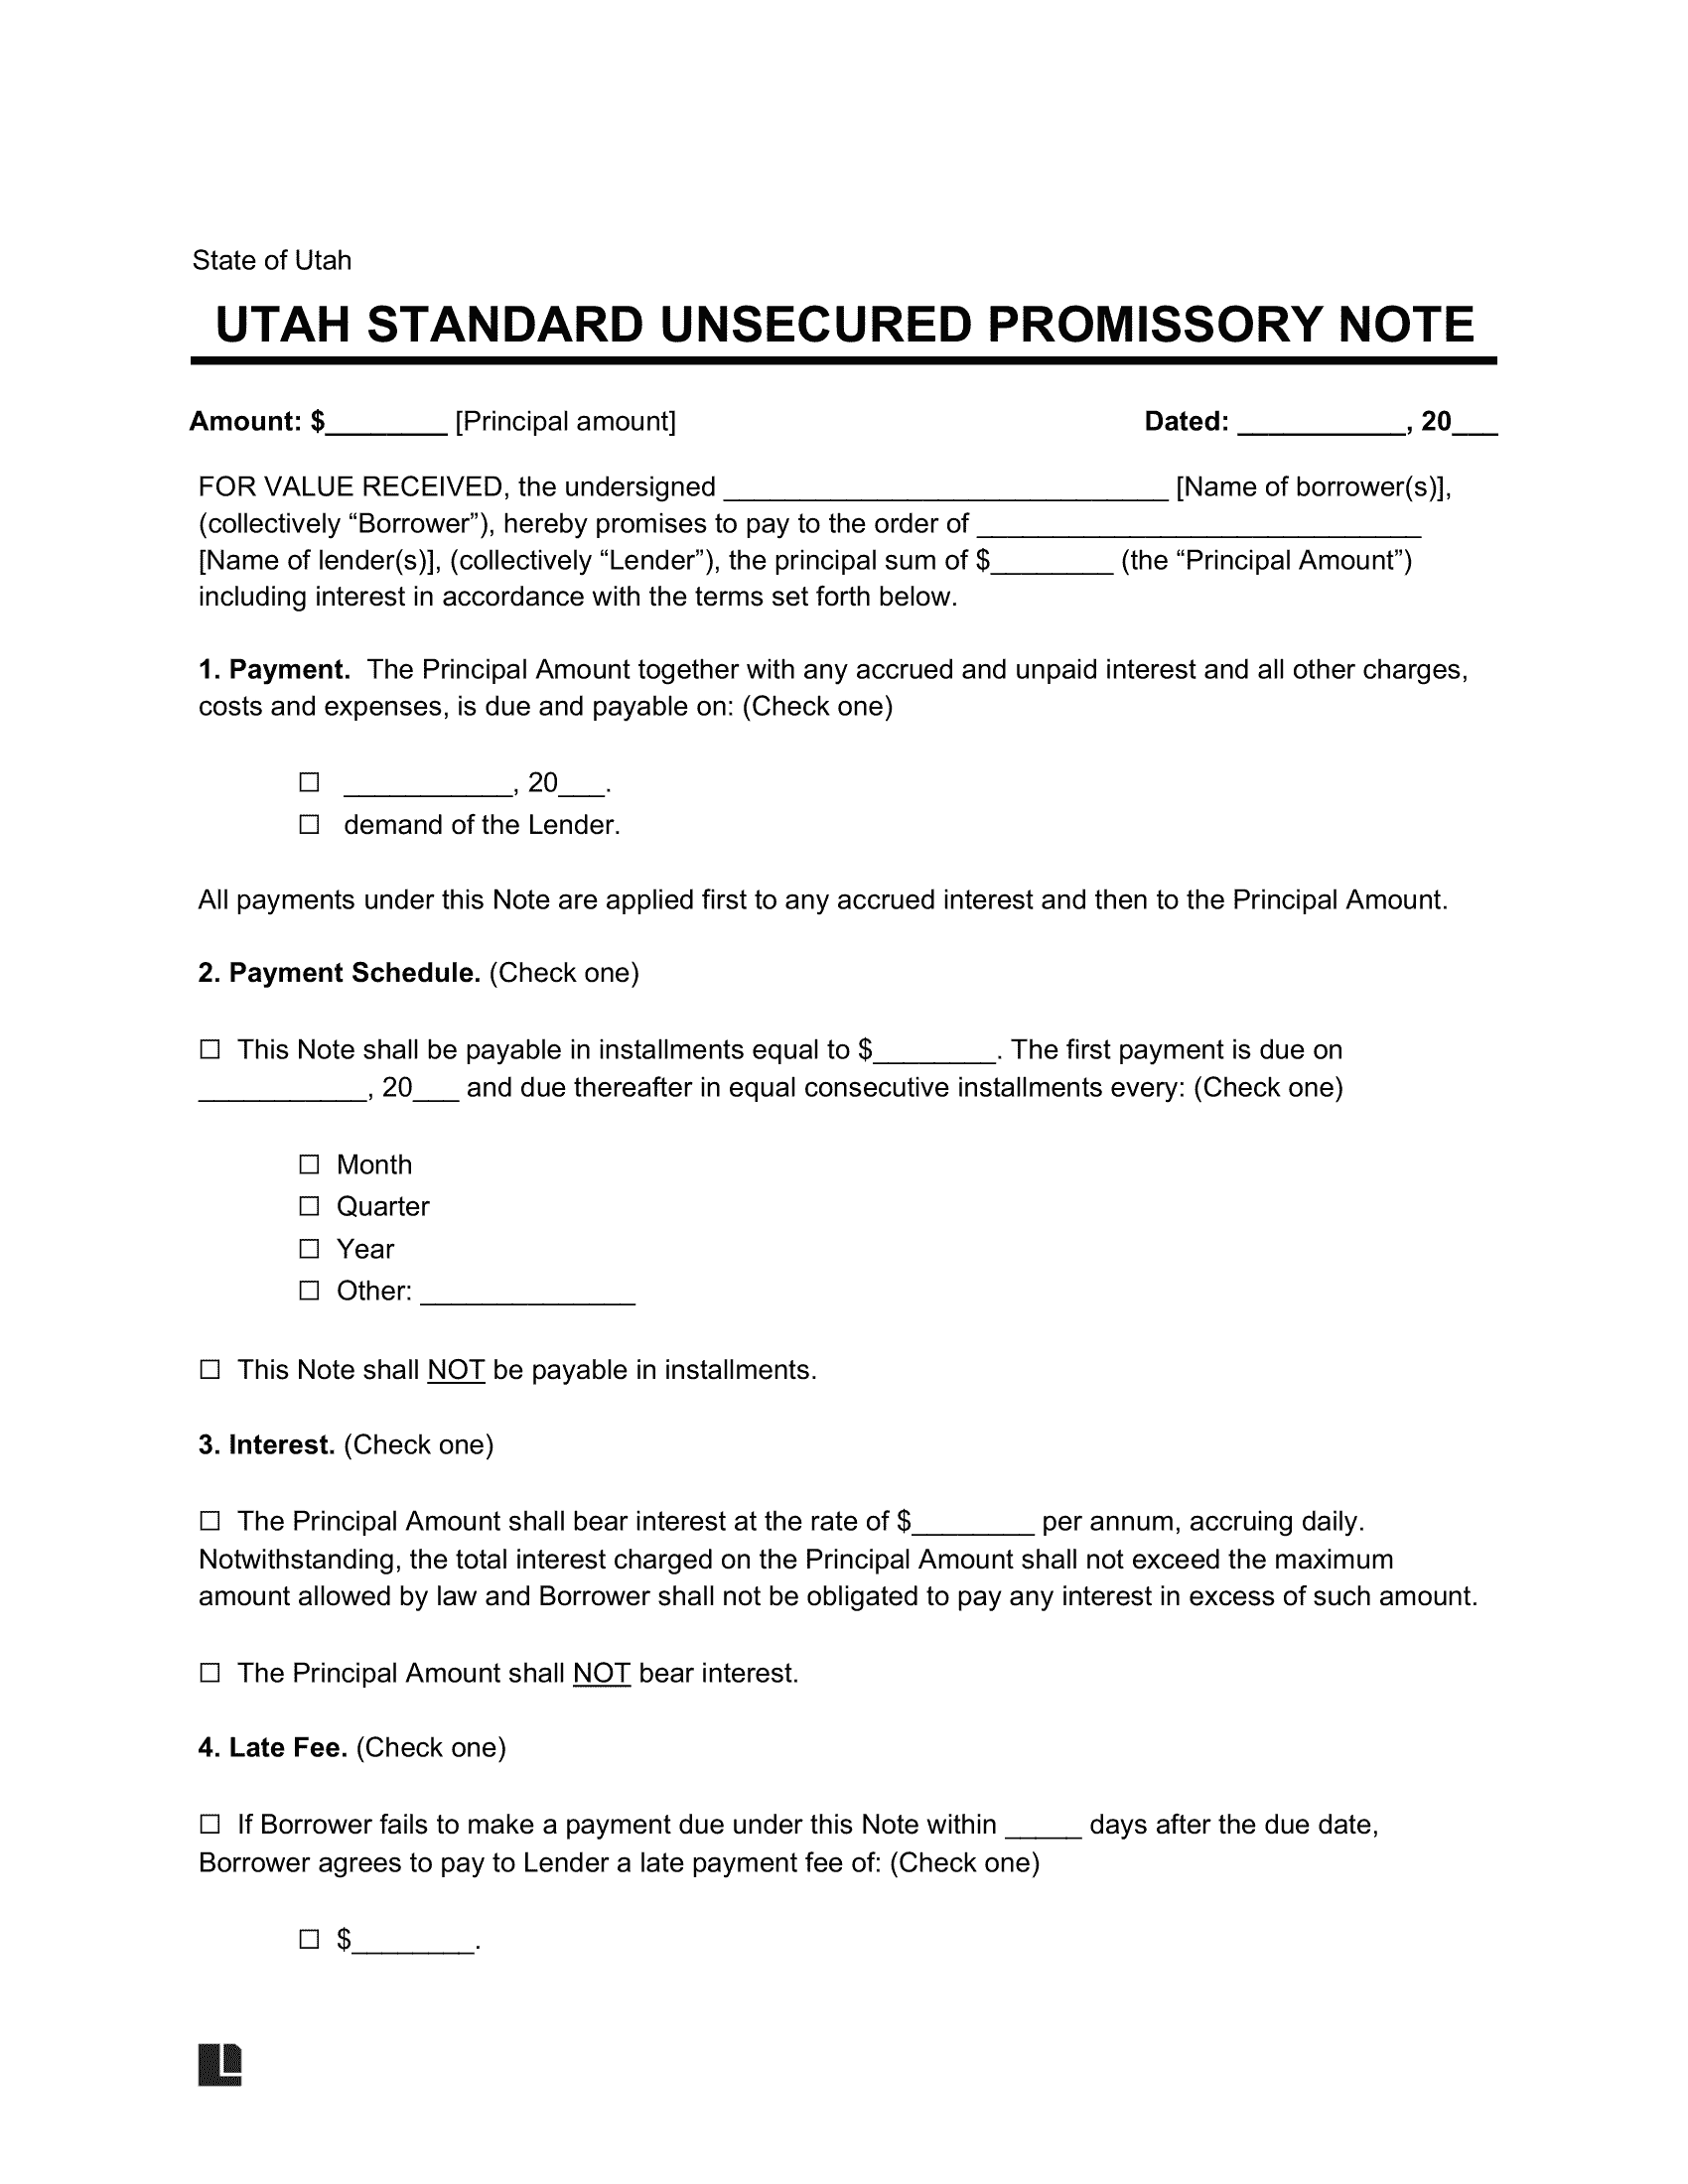 Utah Standard Unsecured Promissory Note Template